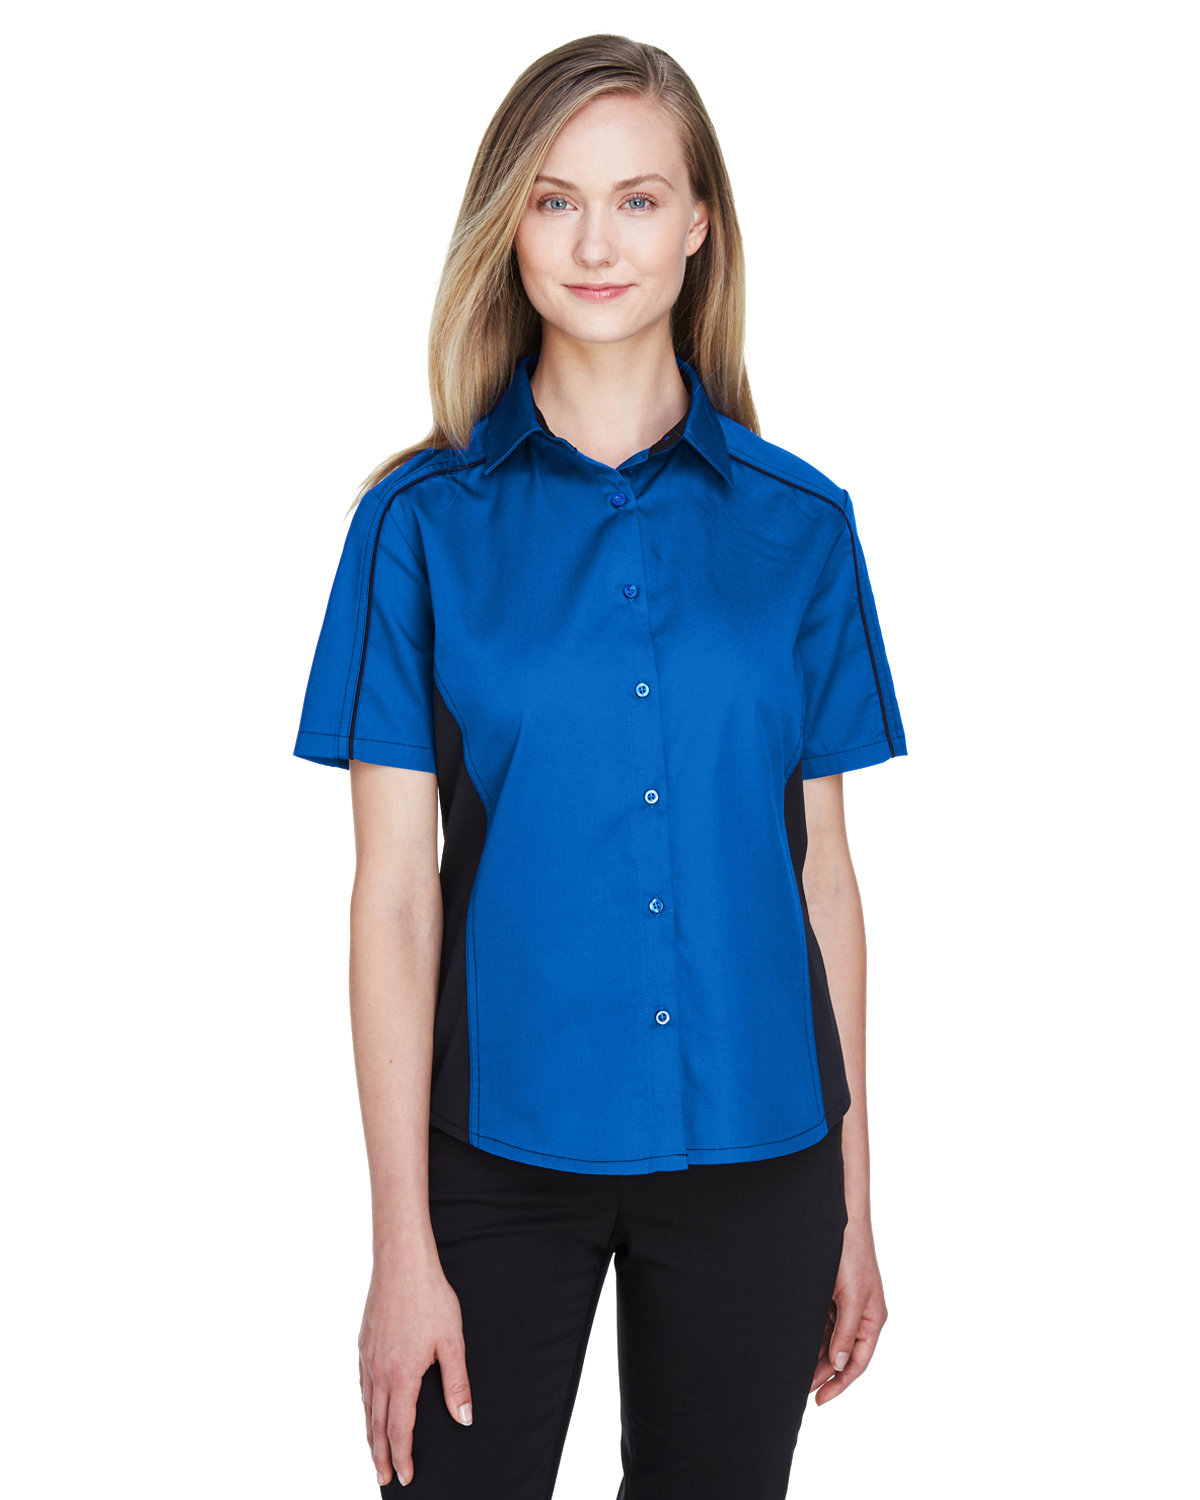 North End Ladies' Fuse Colorblock Twill Shirt TRUE ROYAL/ BLK 